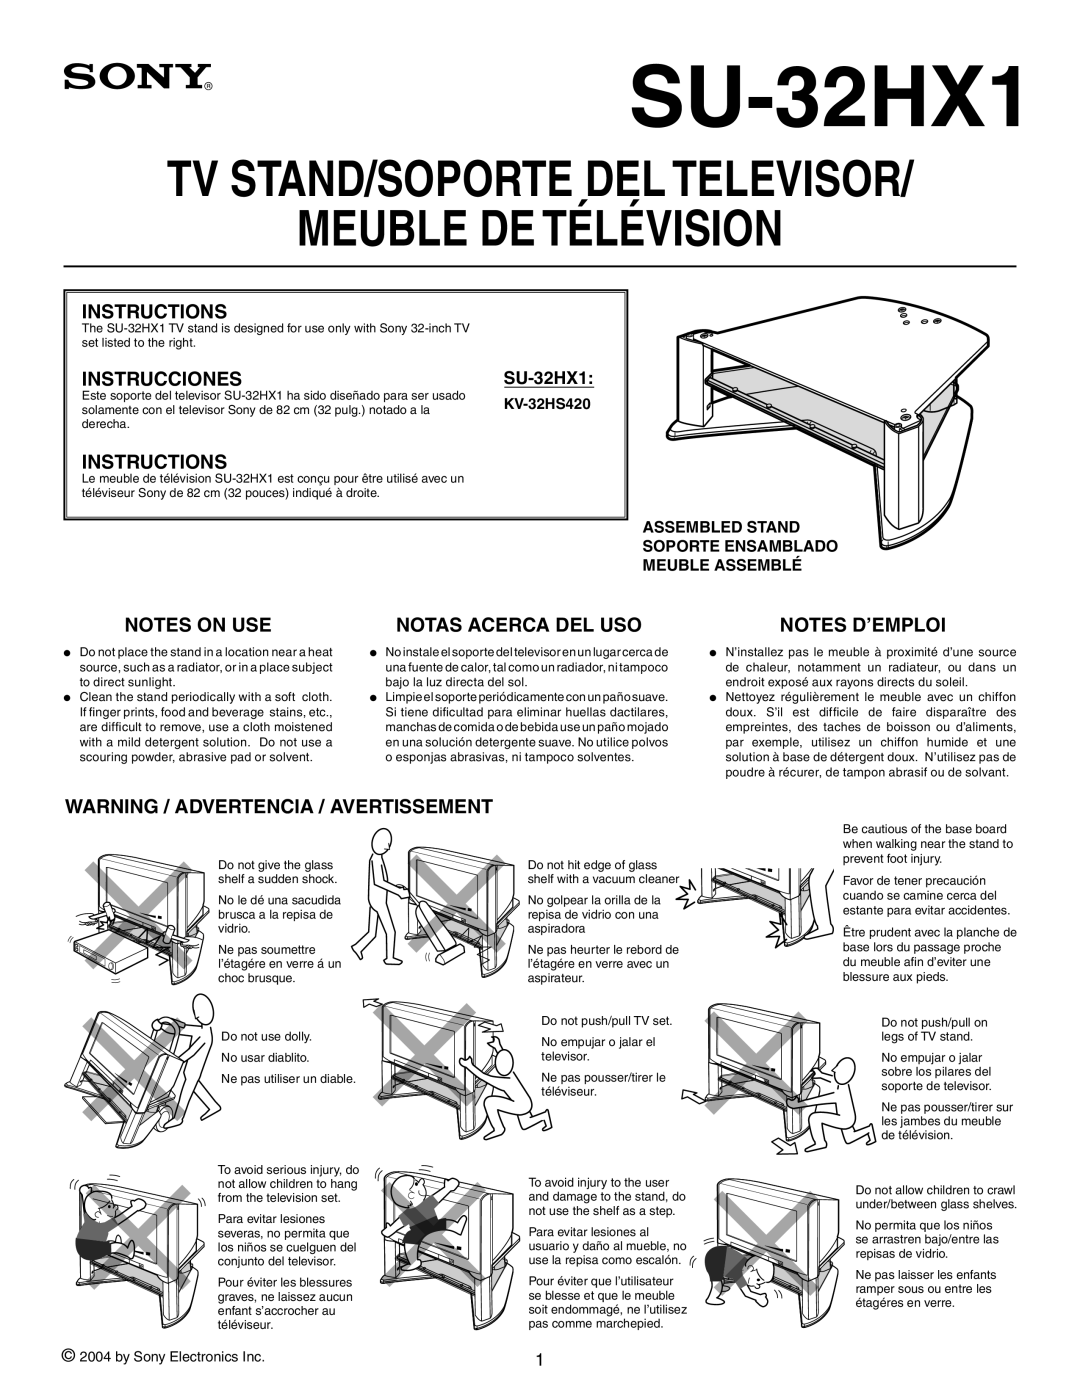 Sony SU-32HX1 manual Meuble De Télévision, Tv Stand/Soporte Del Televisor, Instructions, Instrucciones, Notes On Use 